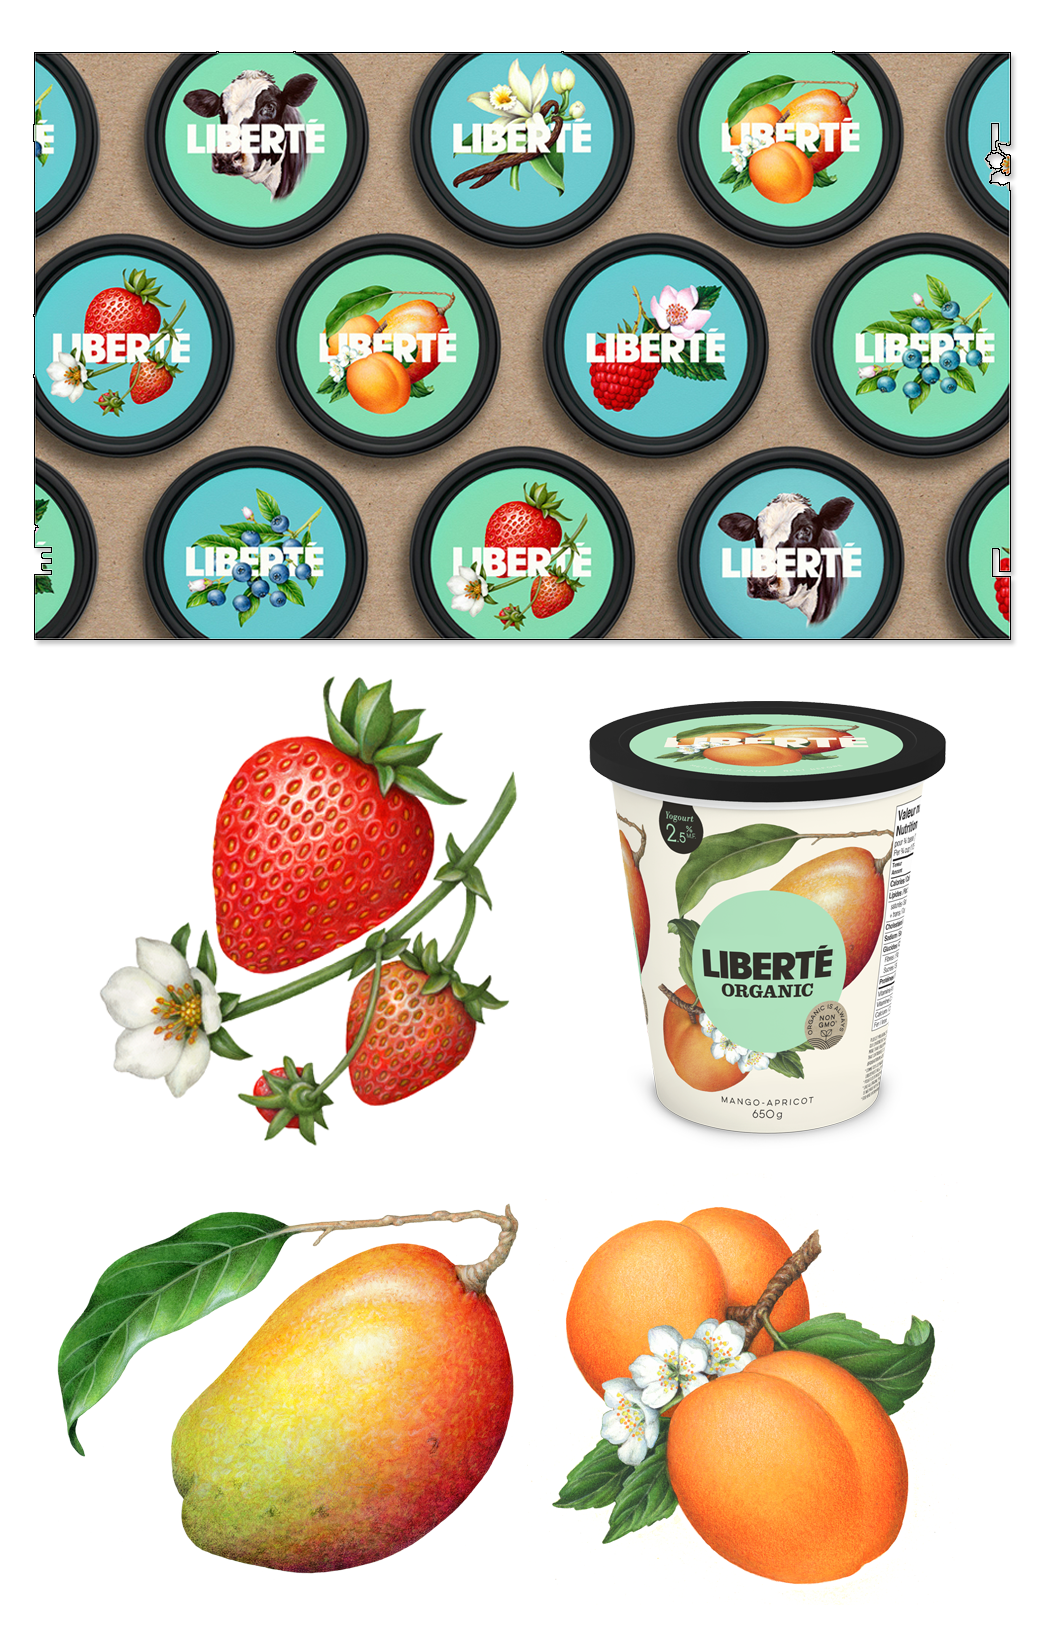 Botanical illustrations used in packaging for Liberte Organic yogurt.